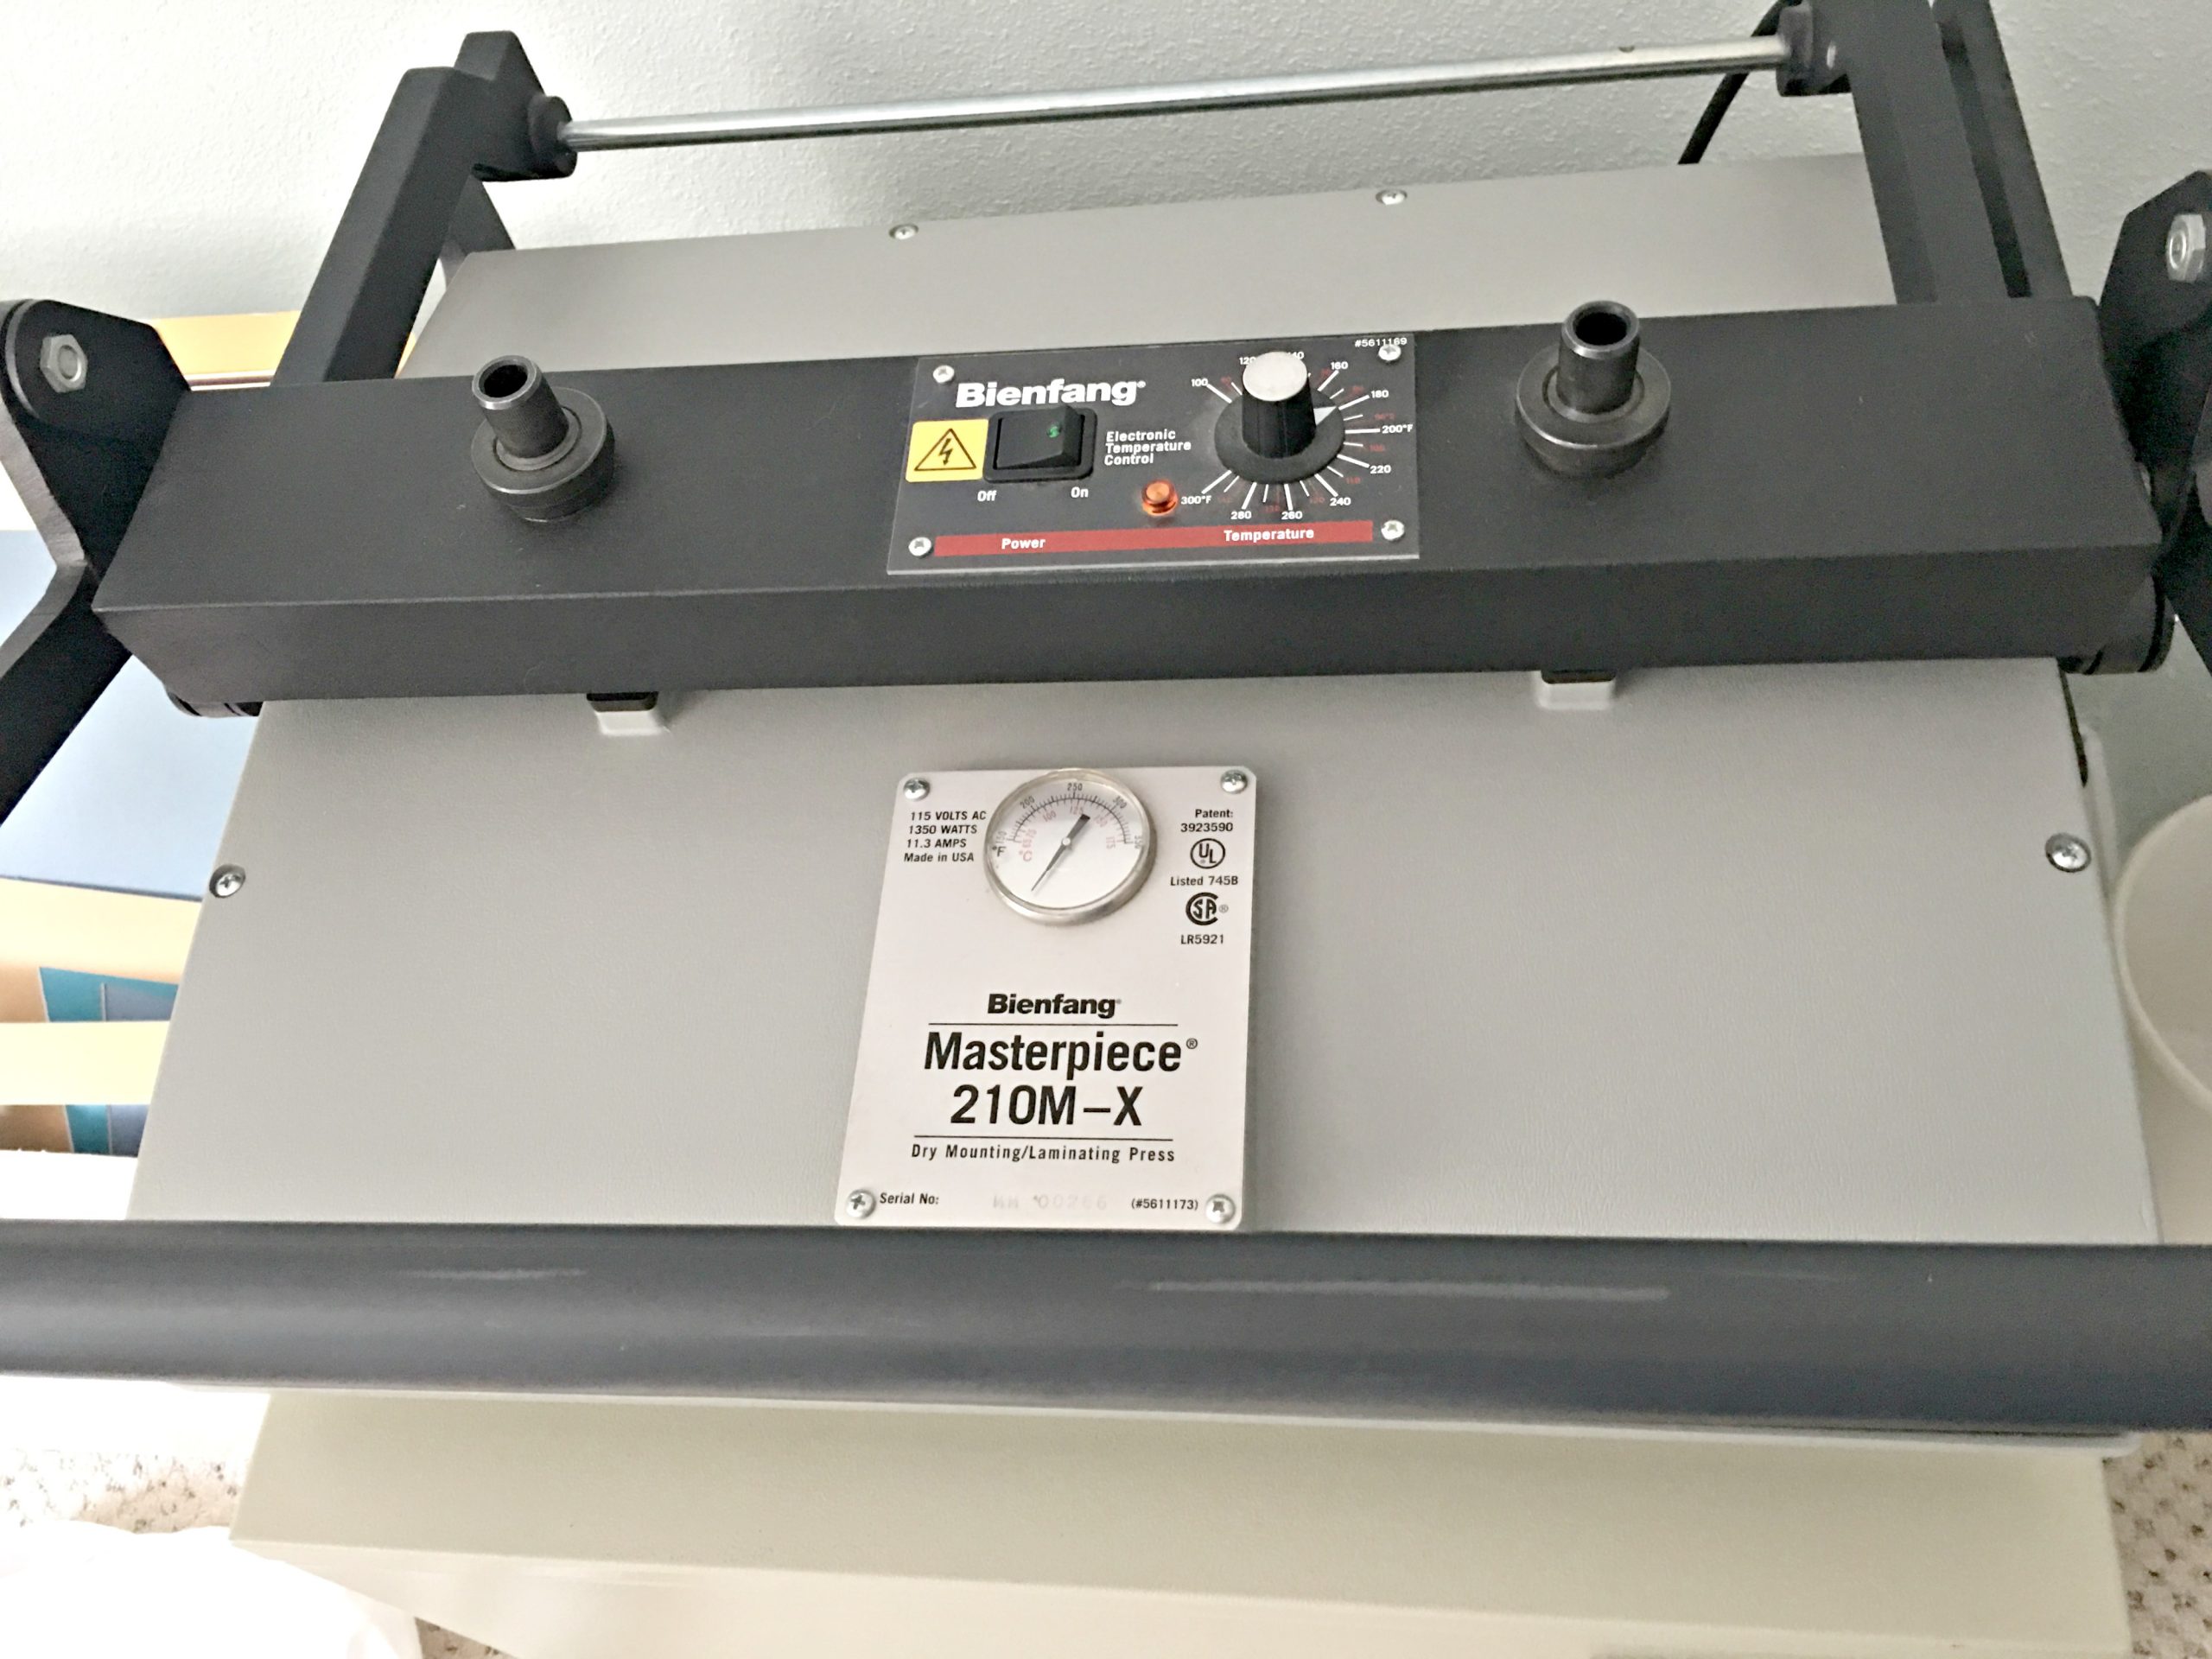 Bienfang Masterpiece 210M-X Mechanical Heat Press (used) Item # UFE-M1765 (MO)